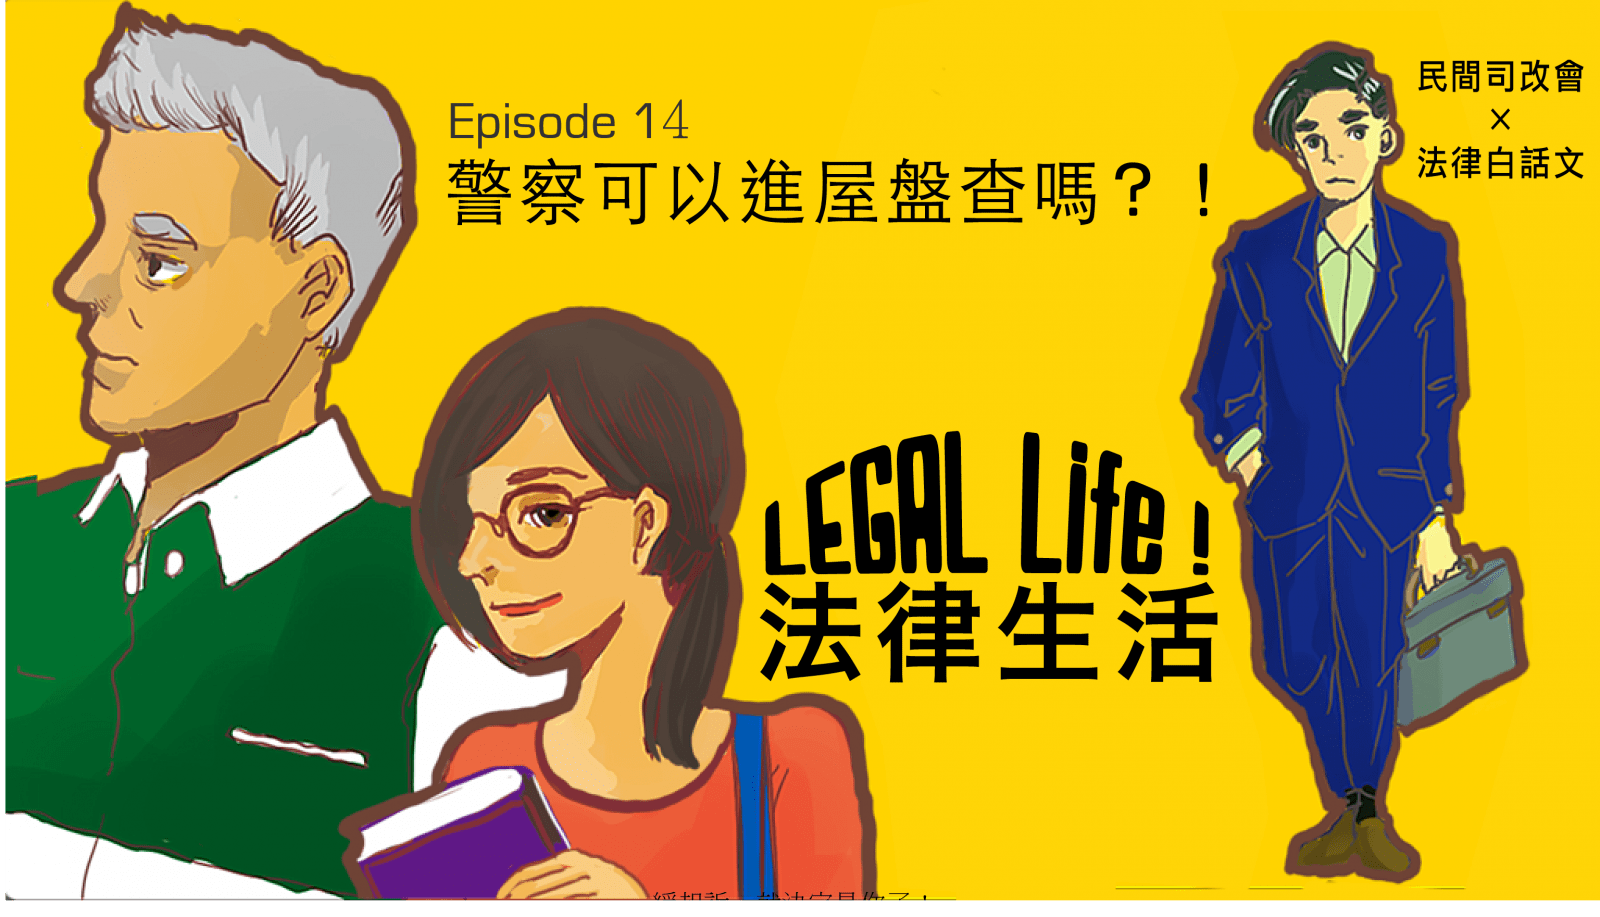 2016/09/legal-life14.png